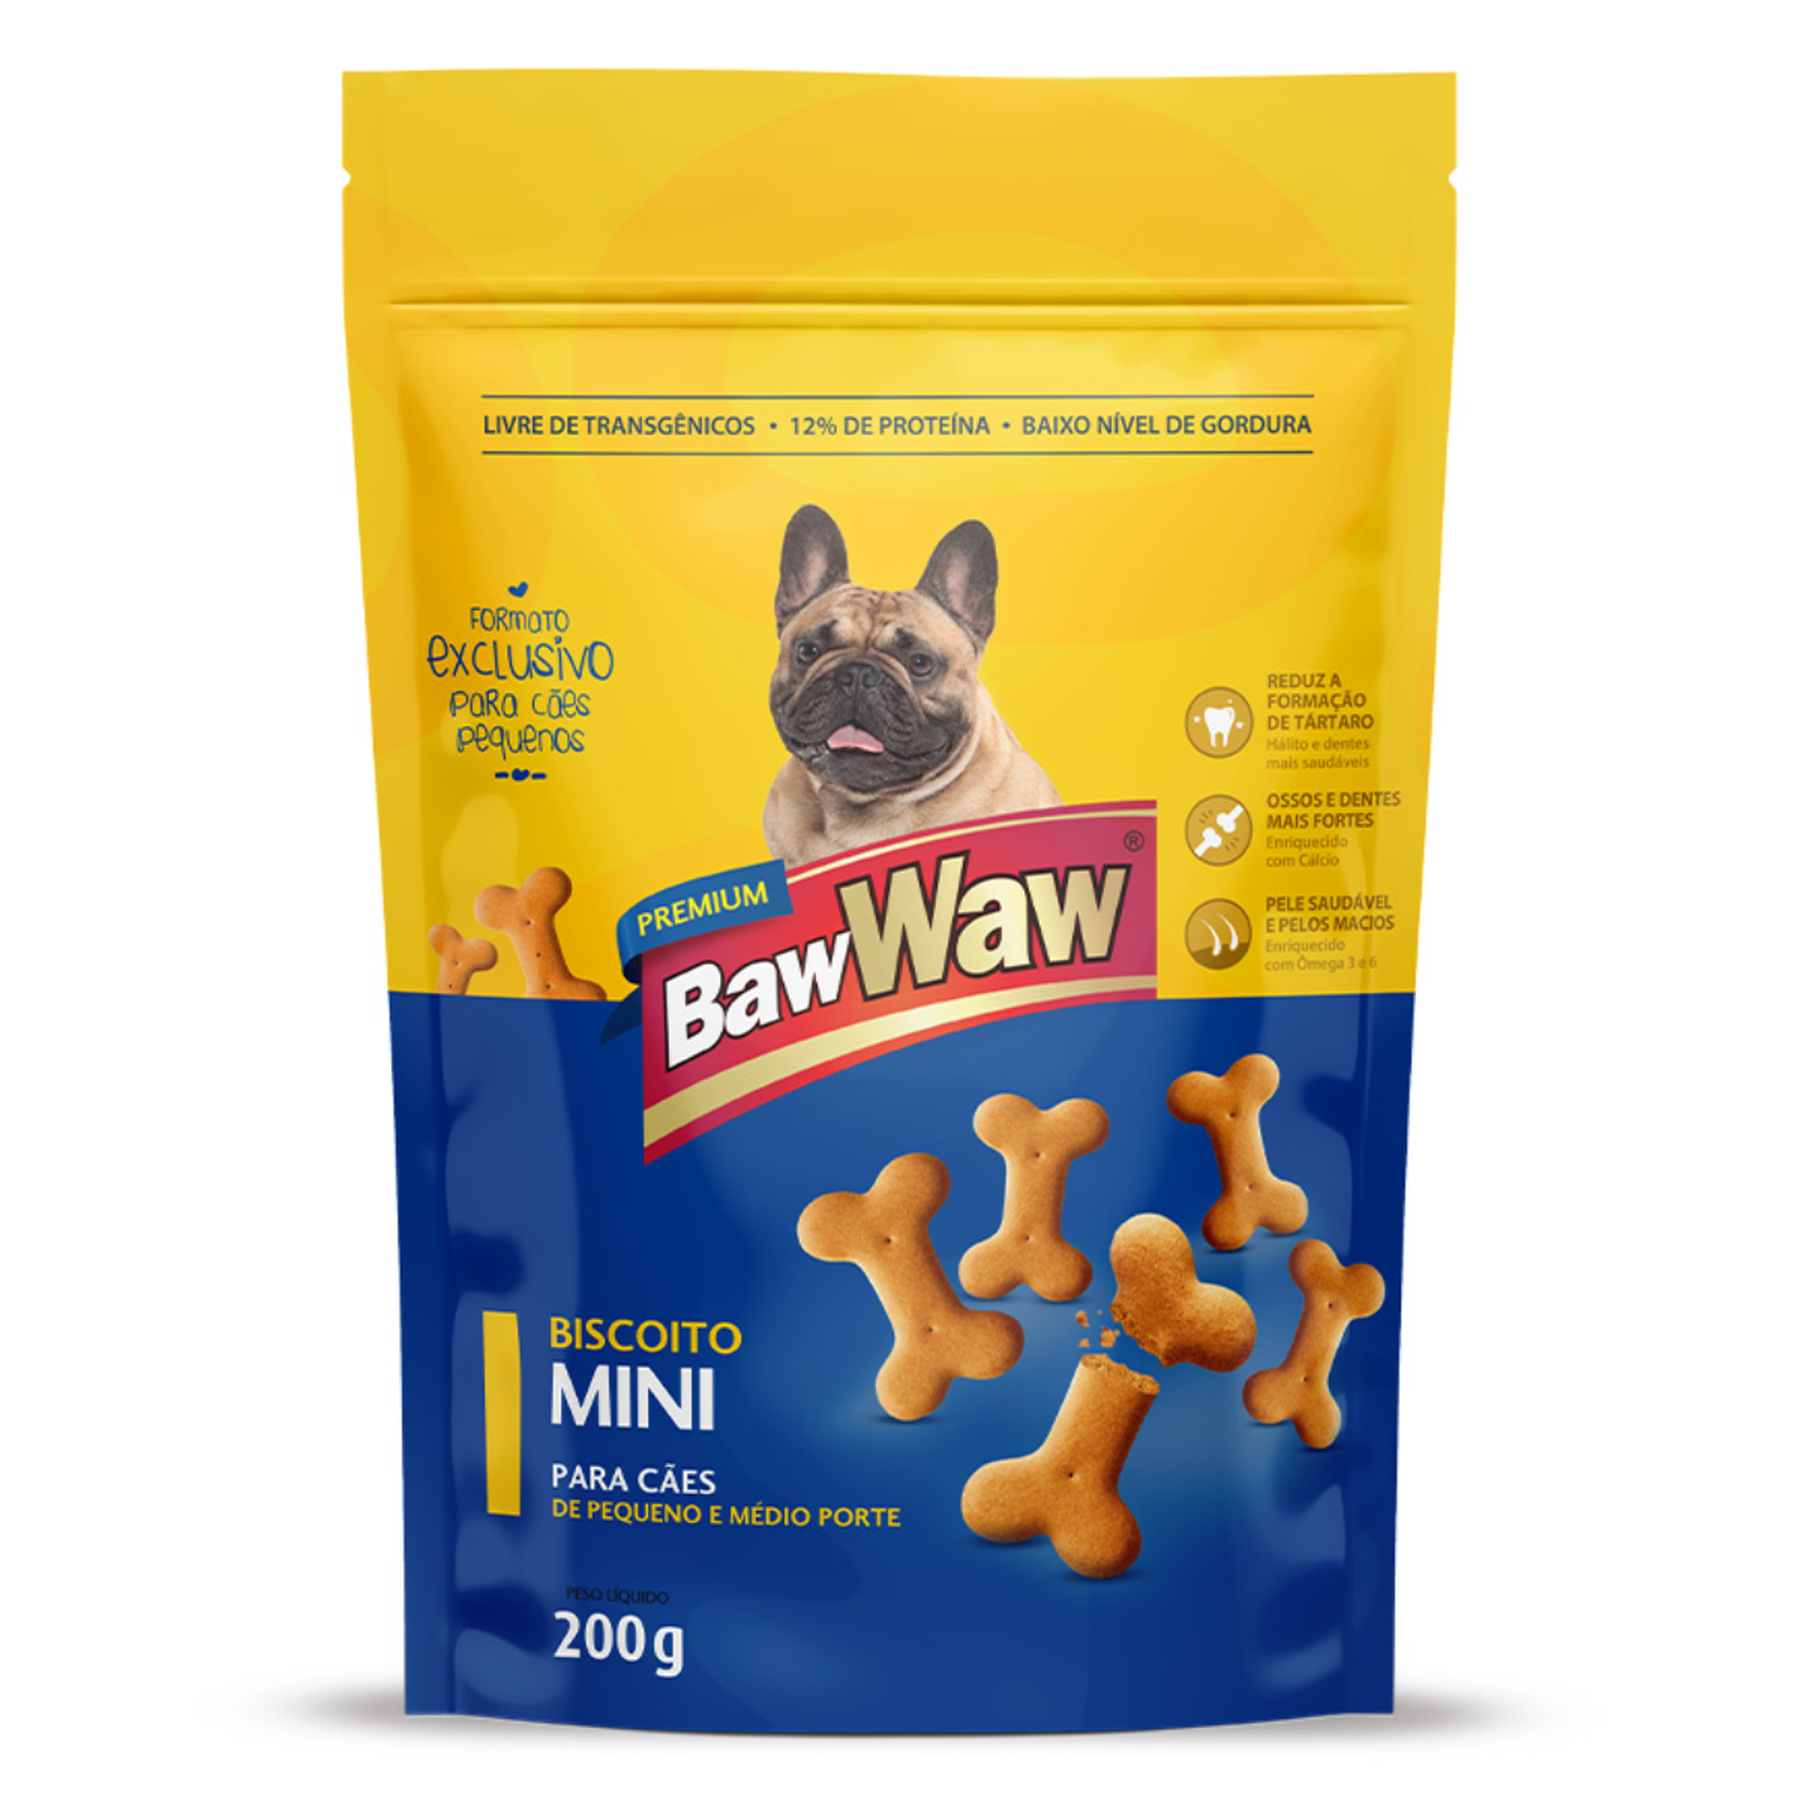 Biscoito Mini para Cães Baw Waw 200g